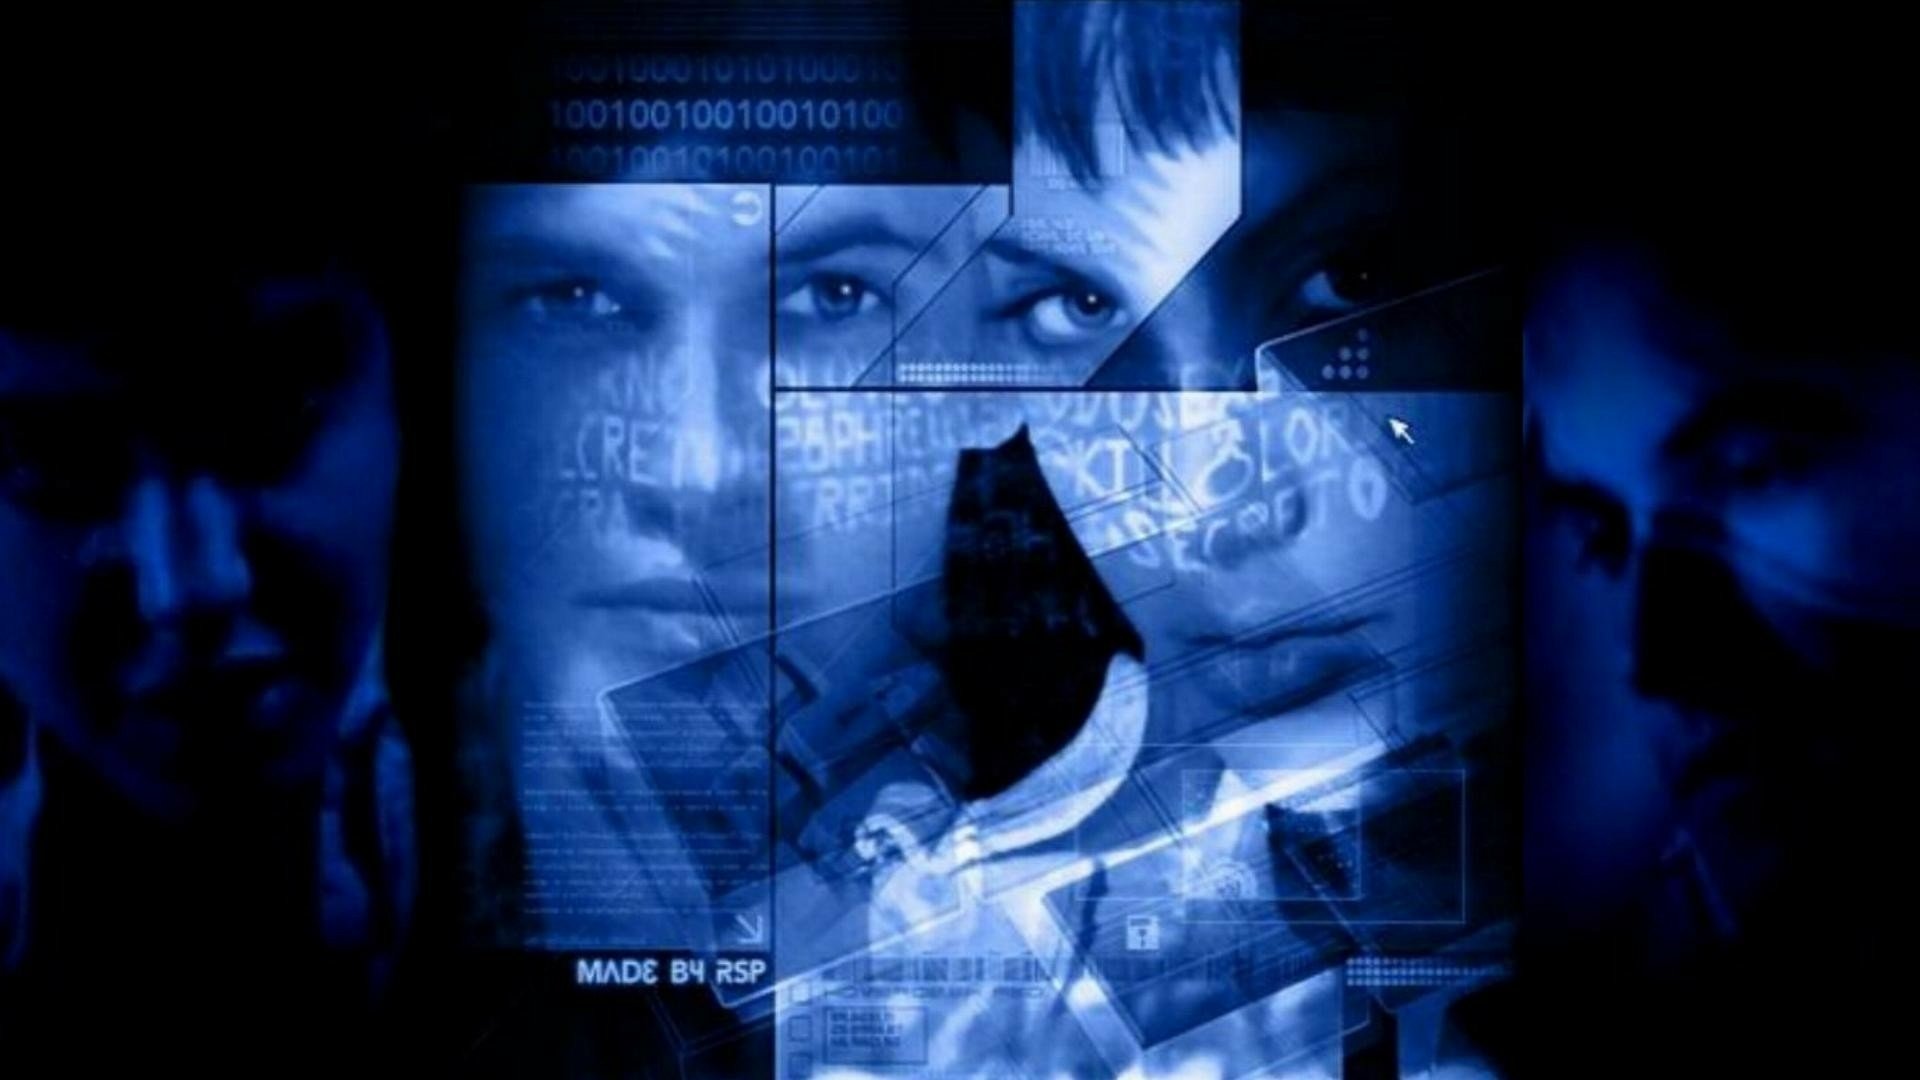 hackers movie wallpaper